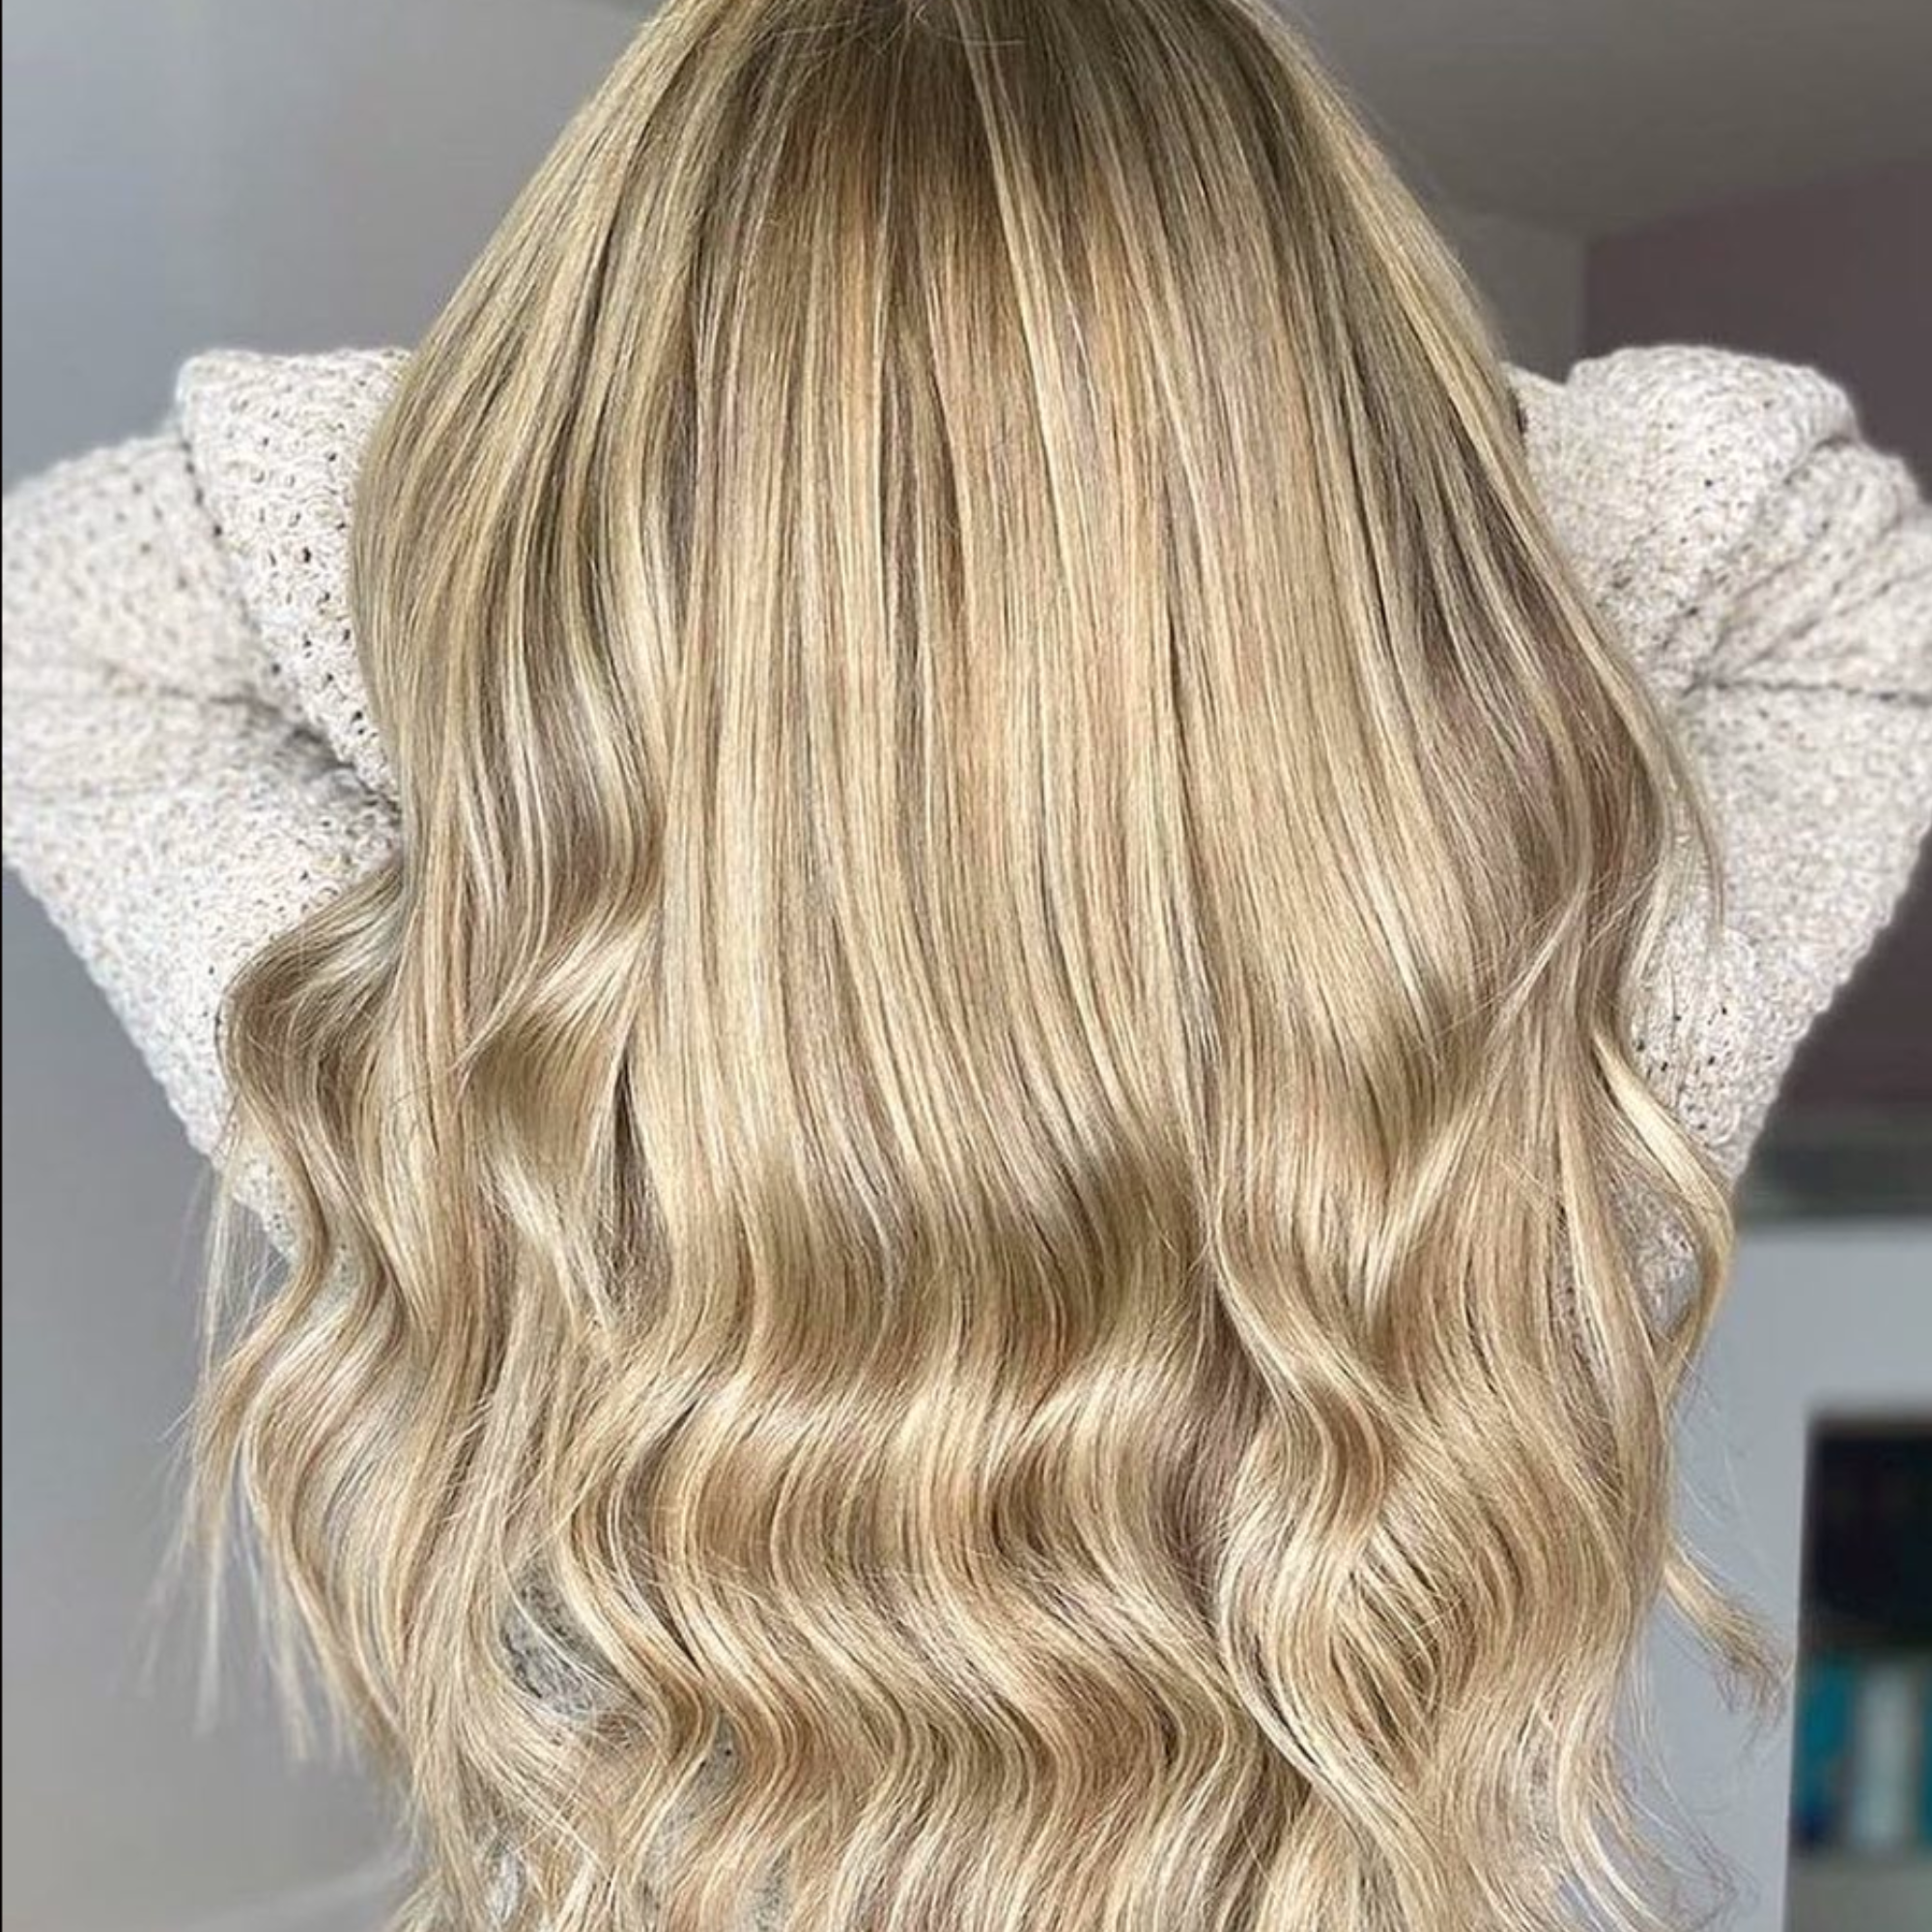 customer wearing hair rehab london 18 inch original clip-in hair extensions in blonde shade